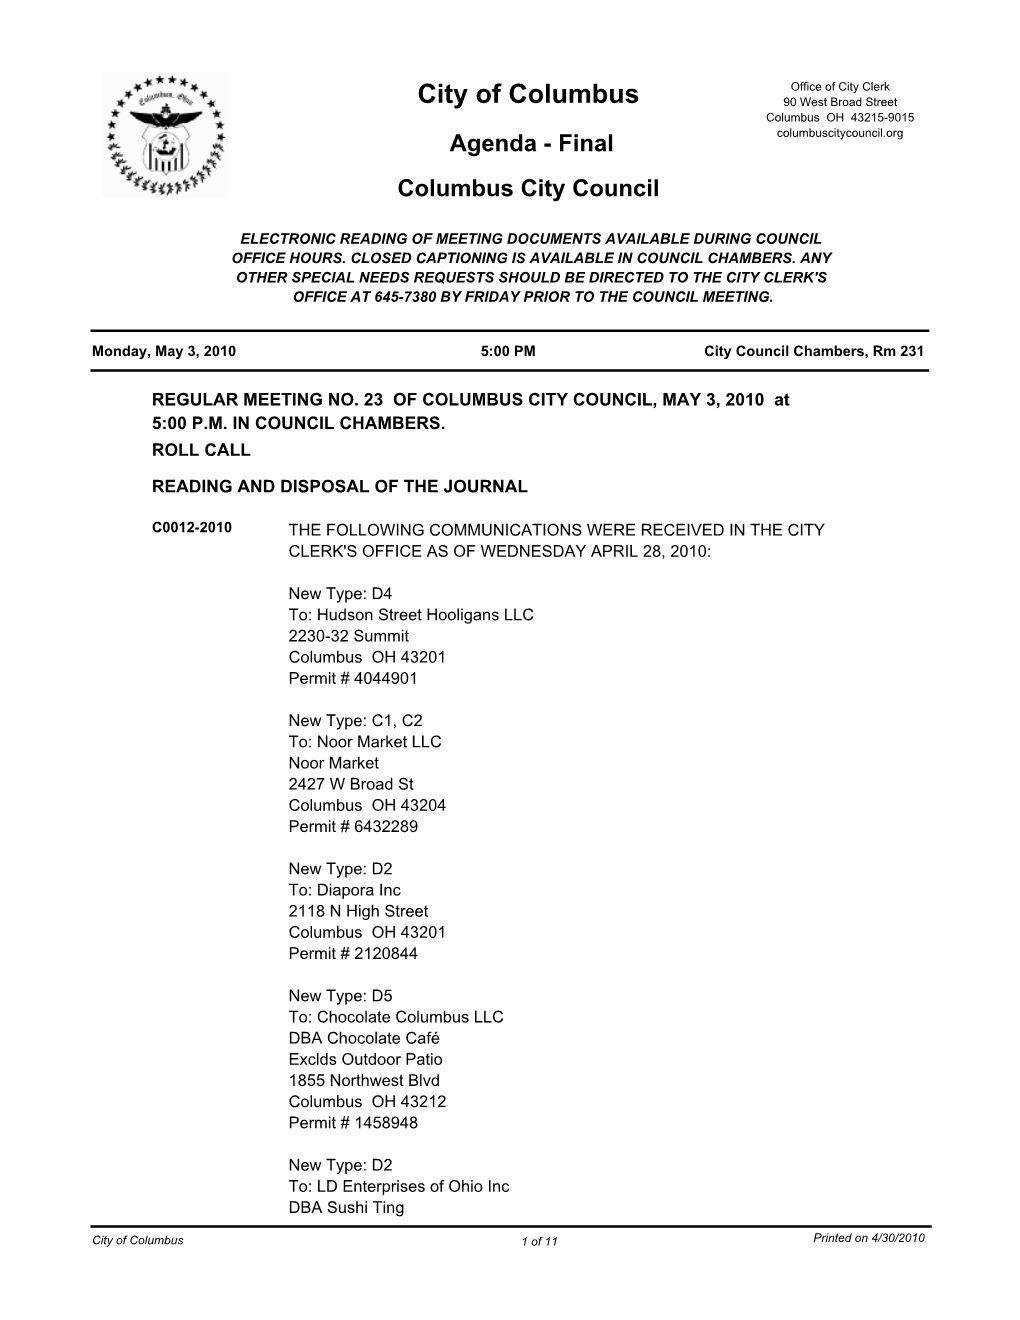 City of Columbus 90 West Broad Street Columbus OH 43215-9015 Agenda - Final Columbuscitycouncil.Org Columbus City Council